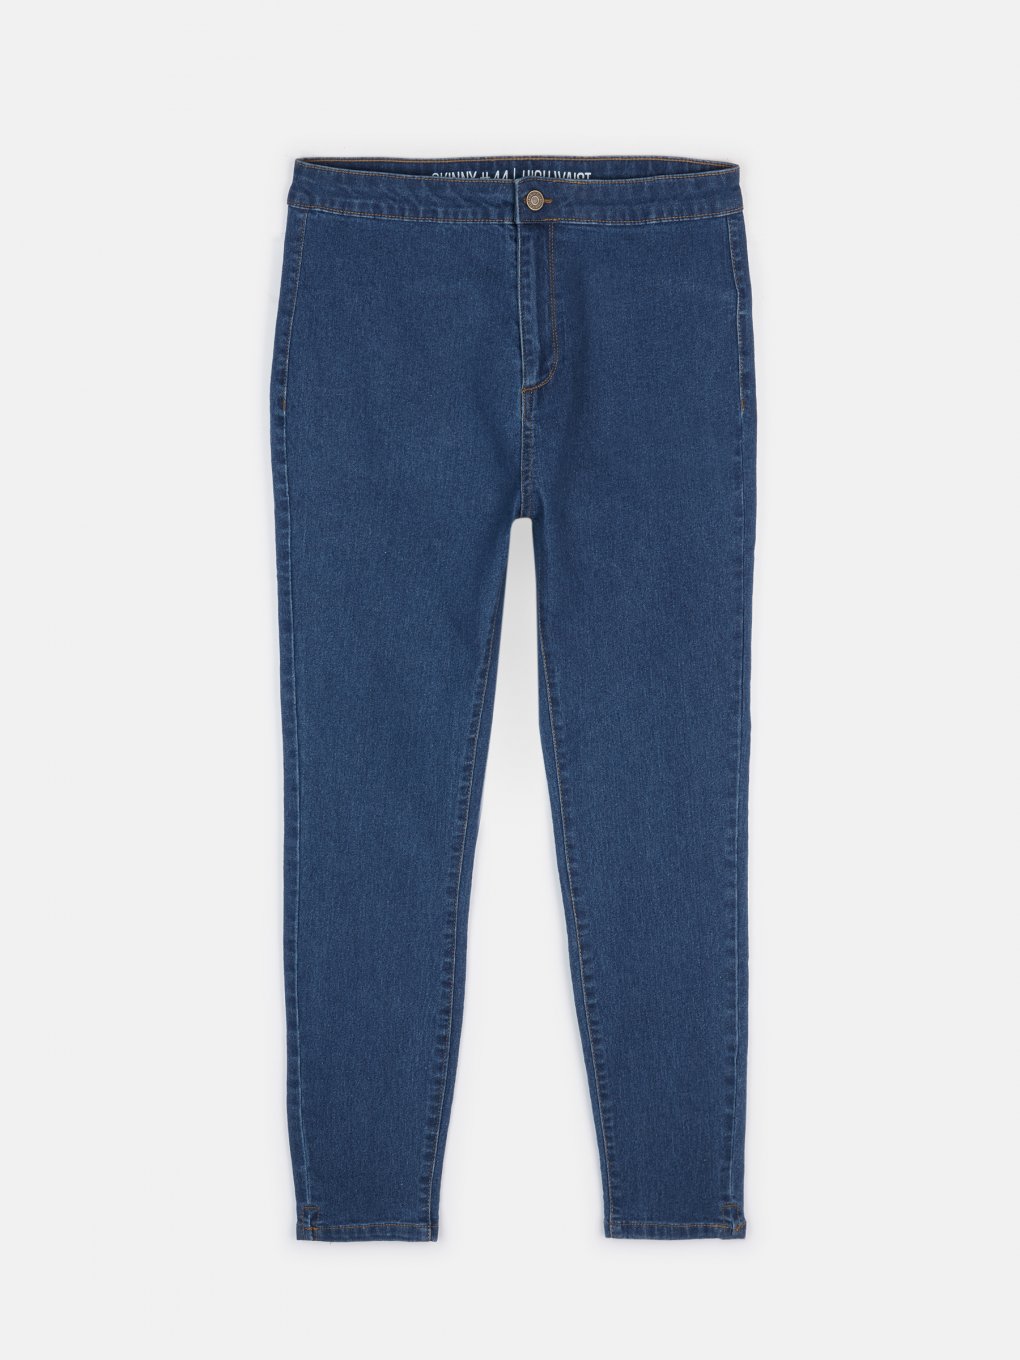 Plus size basic high waist skinny jeans